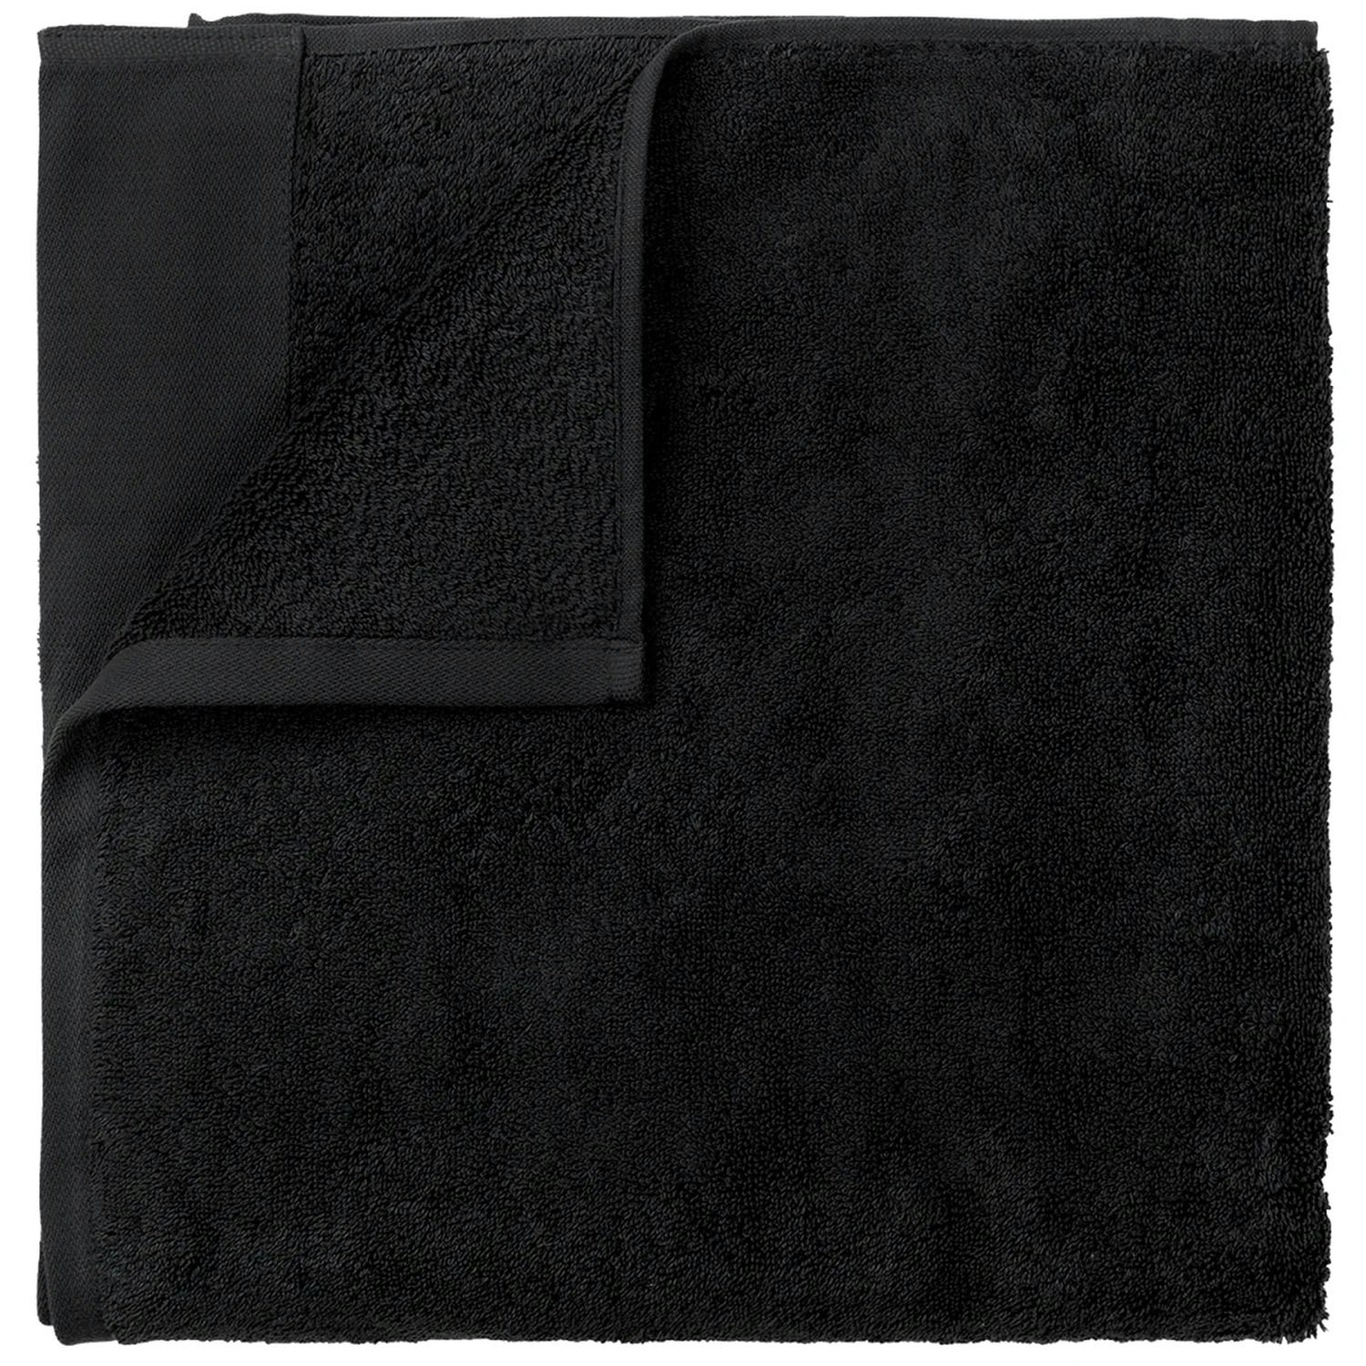 Riva Guest Towel 2-pack, Black